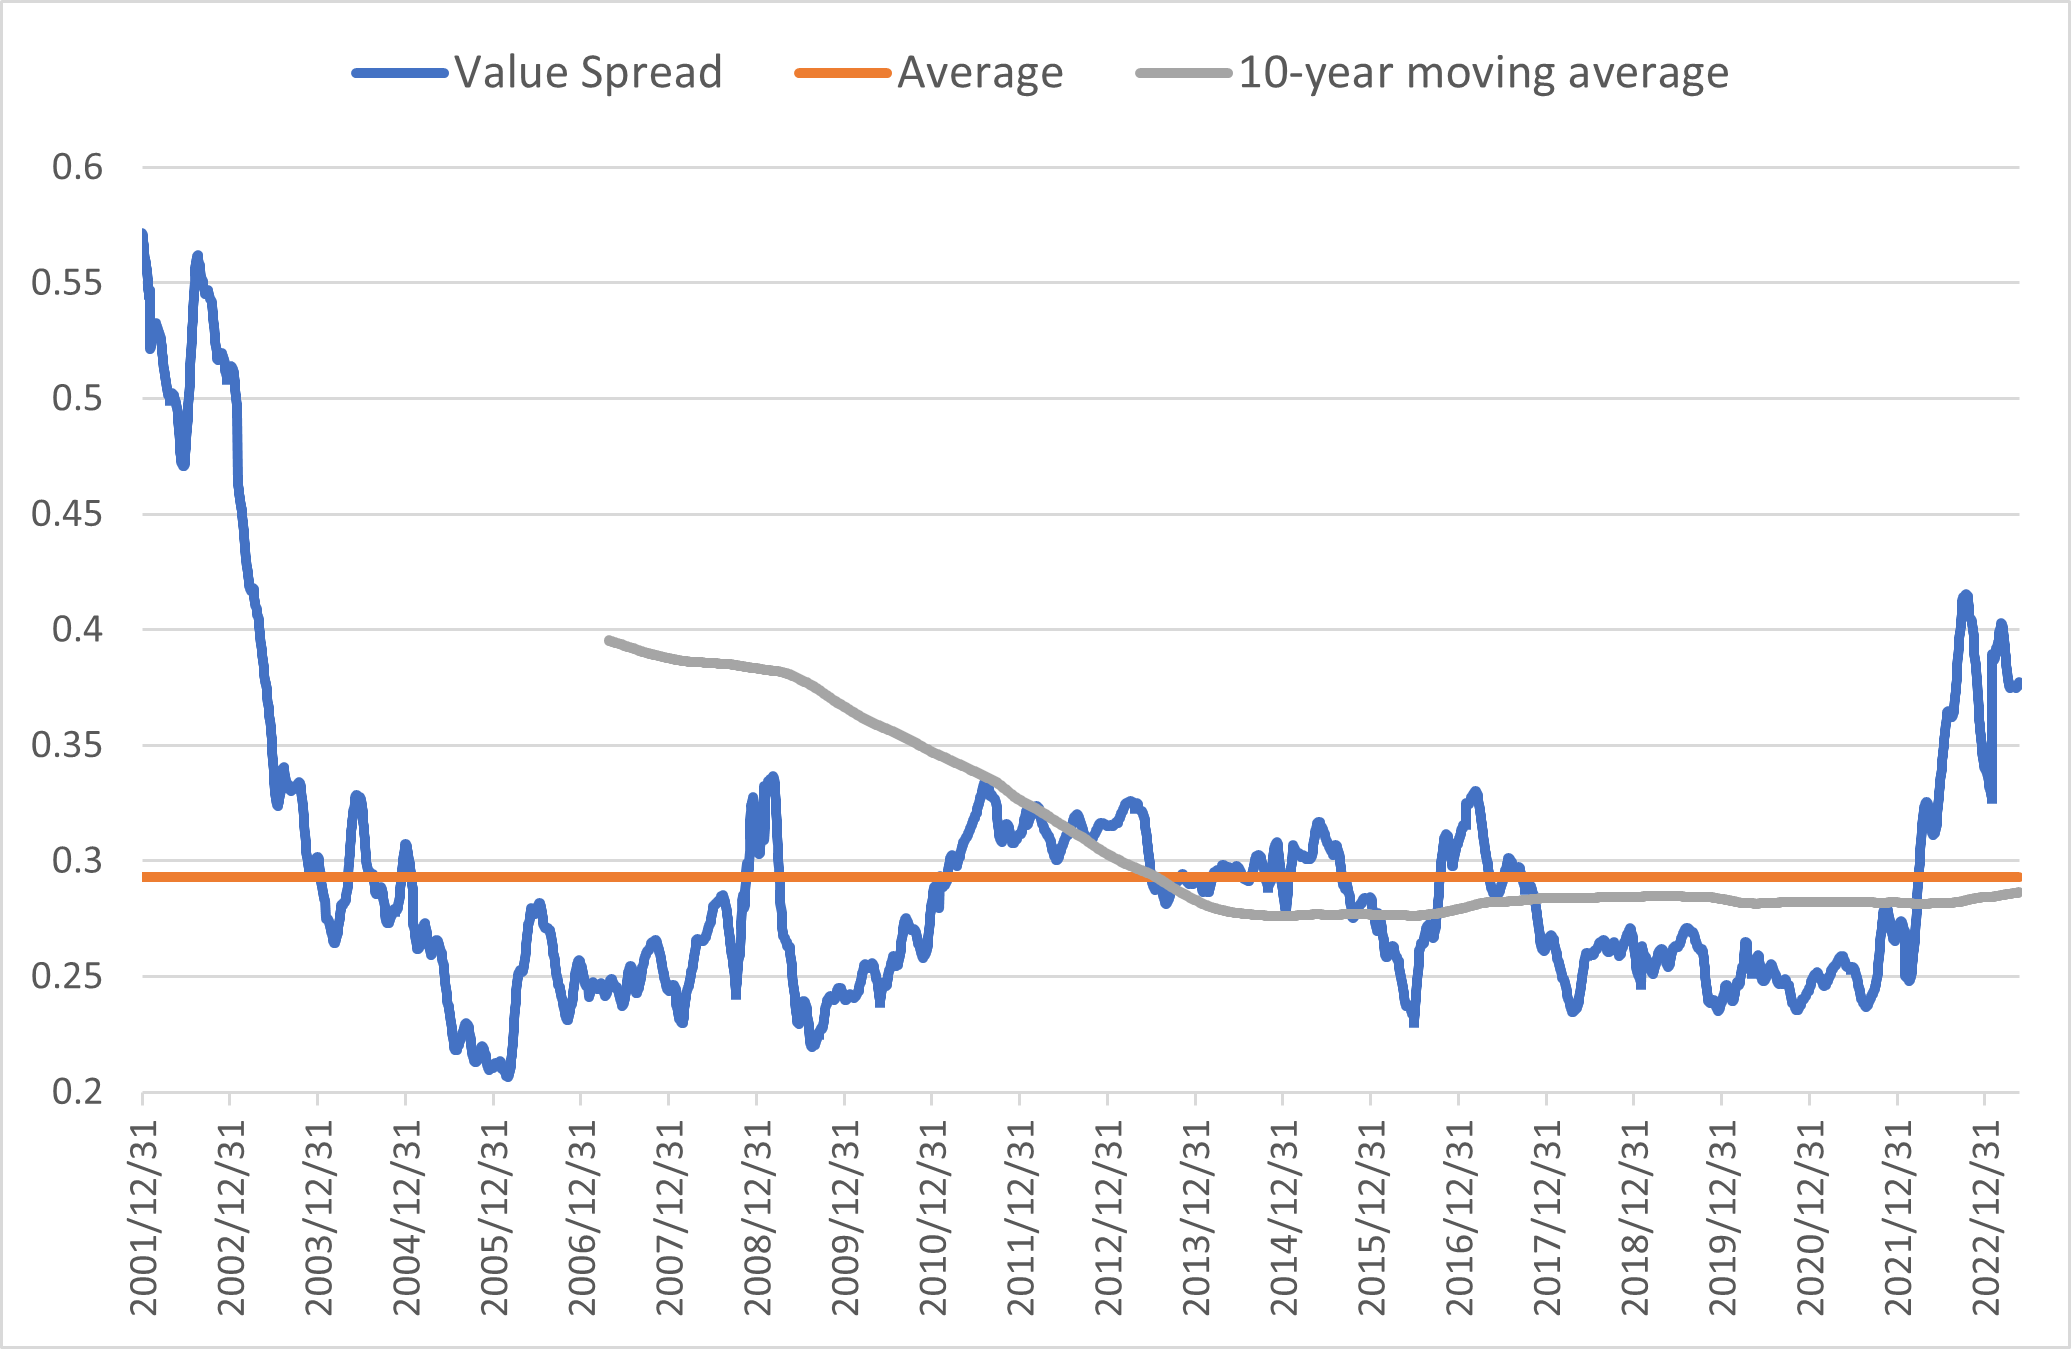 Value spread and average